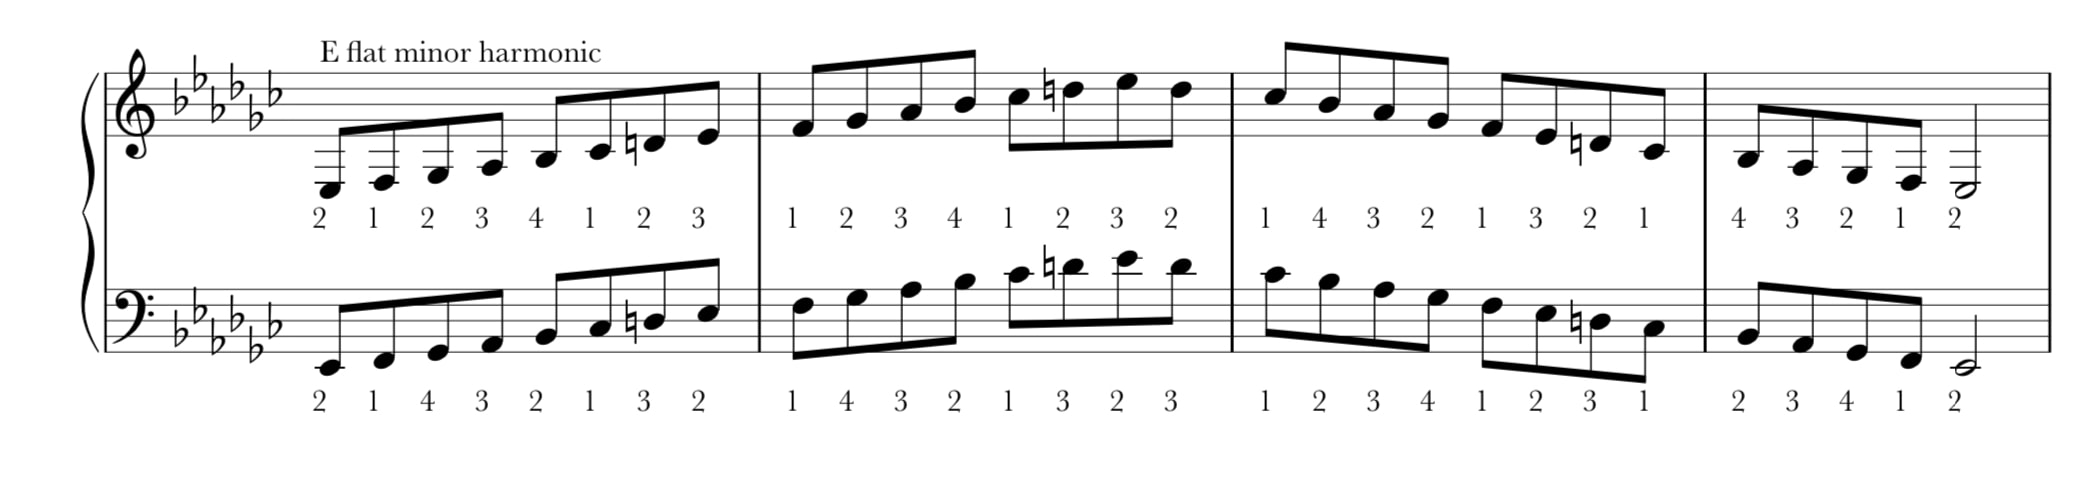 E flat harmonic minor scale